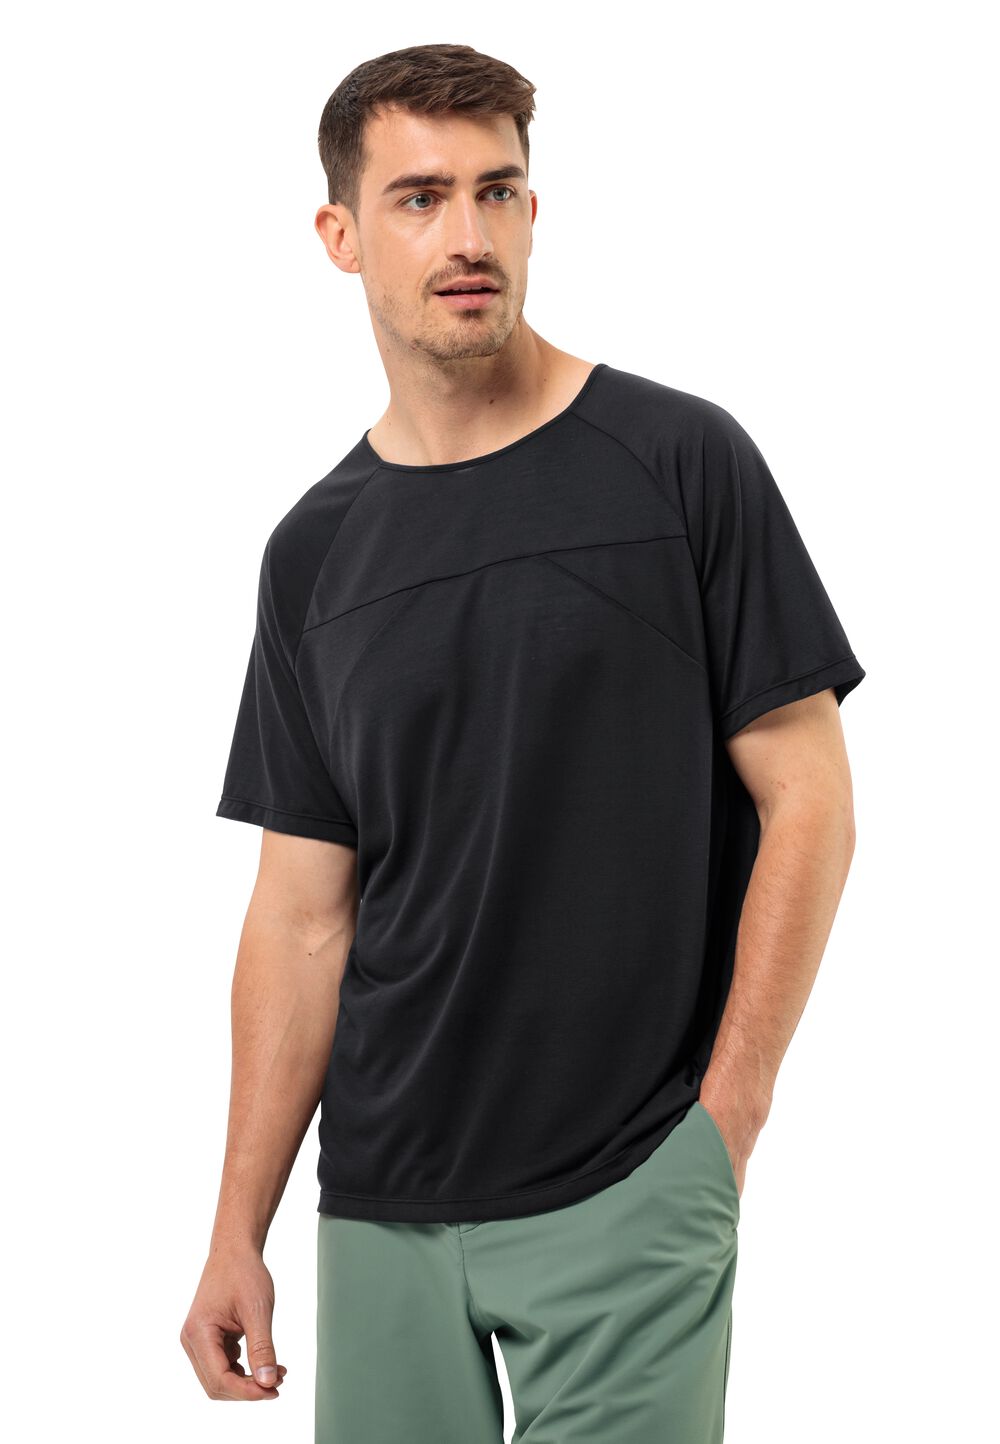 Jack Wolfskin Wanderword T-Shirt Men Functioneel shirt Heren XL zwart granite black